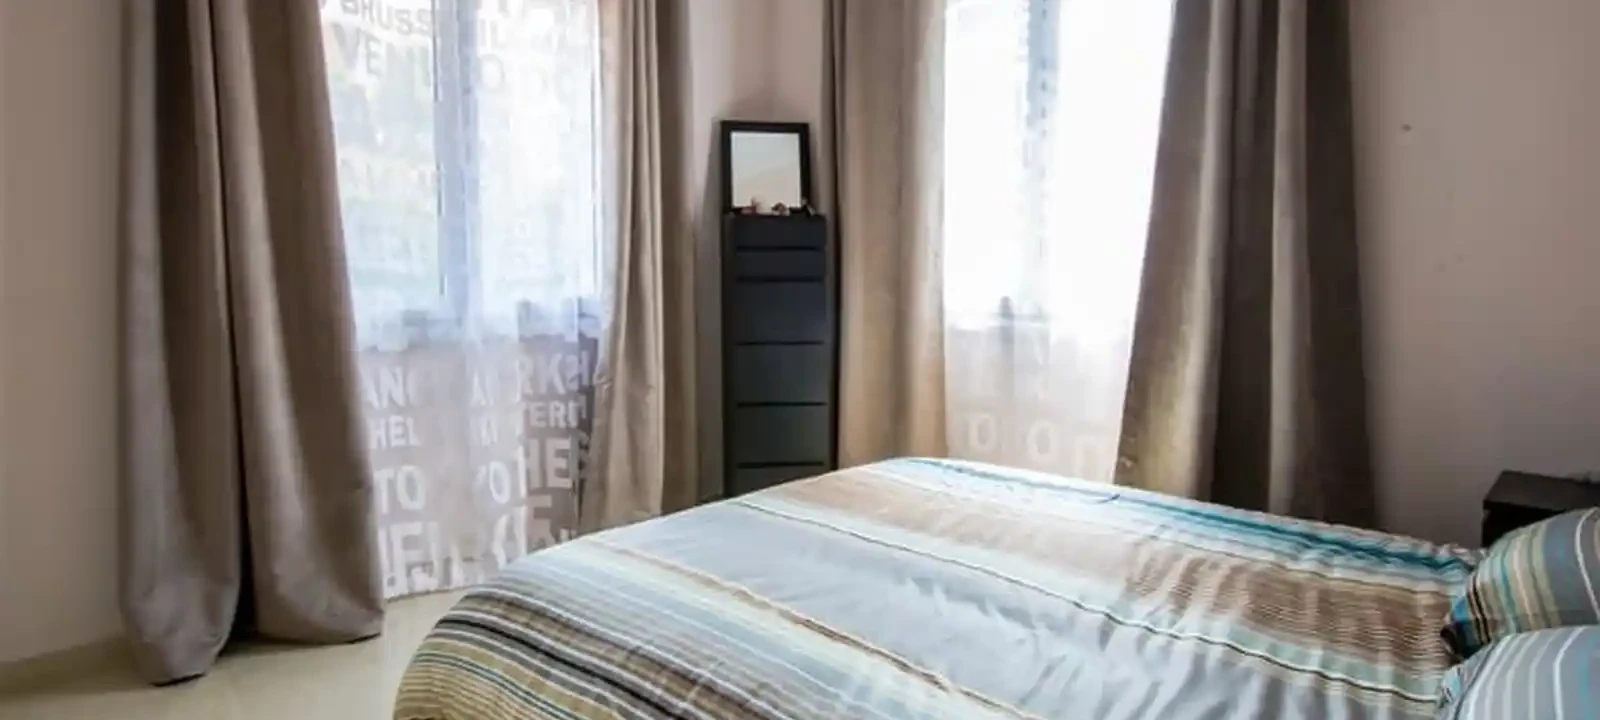 3-bedroom villa fоr sаle €480.000, image 1